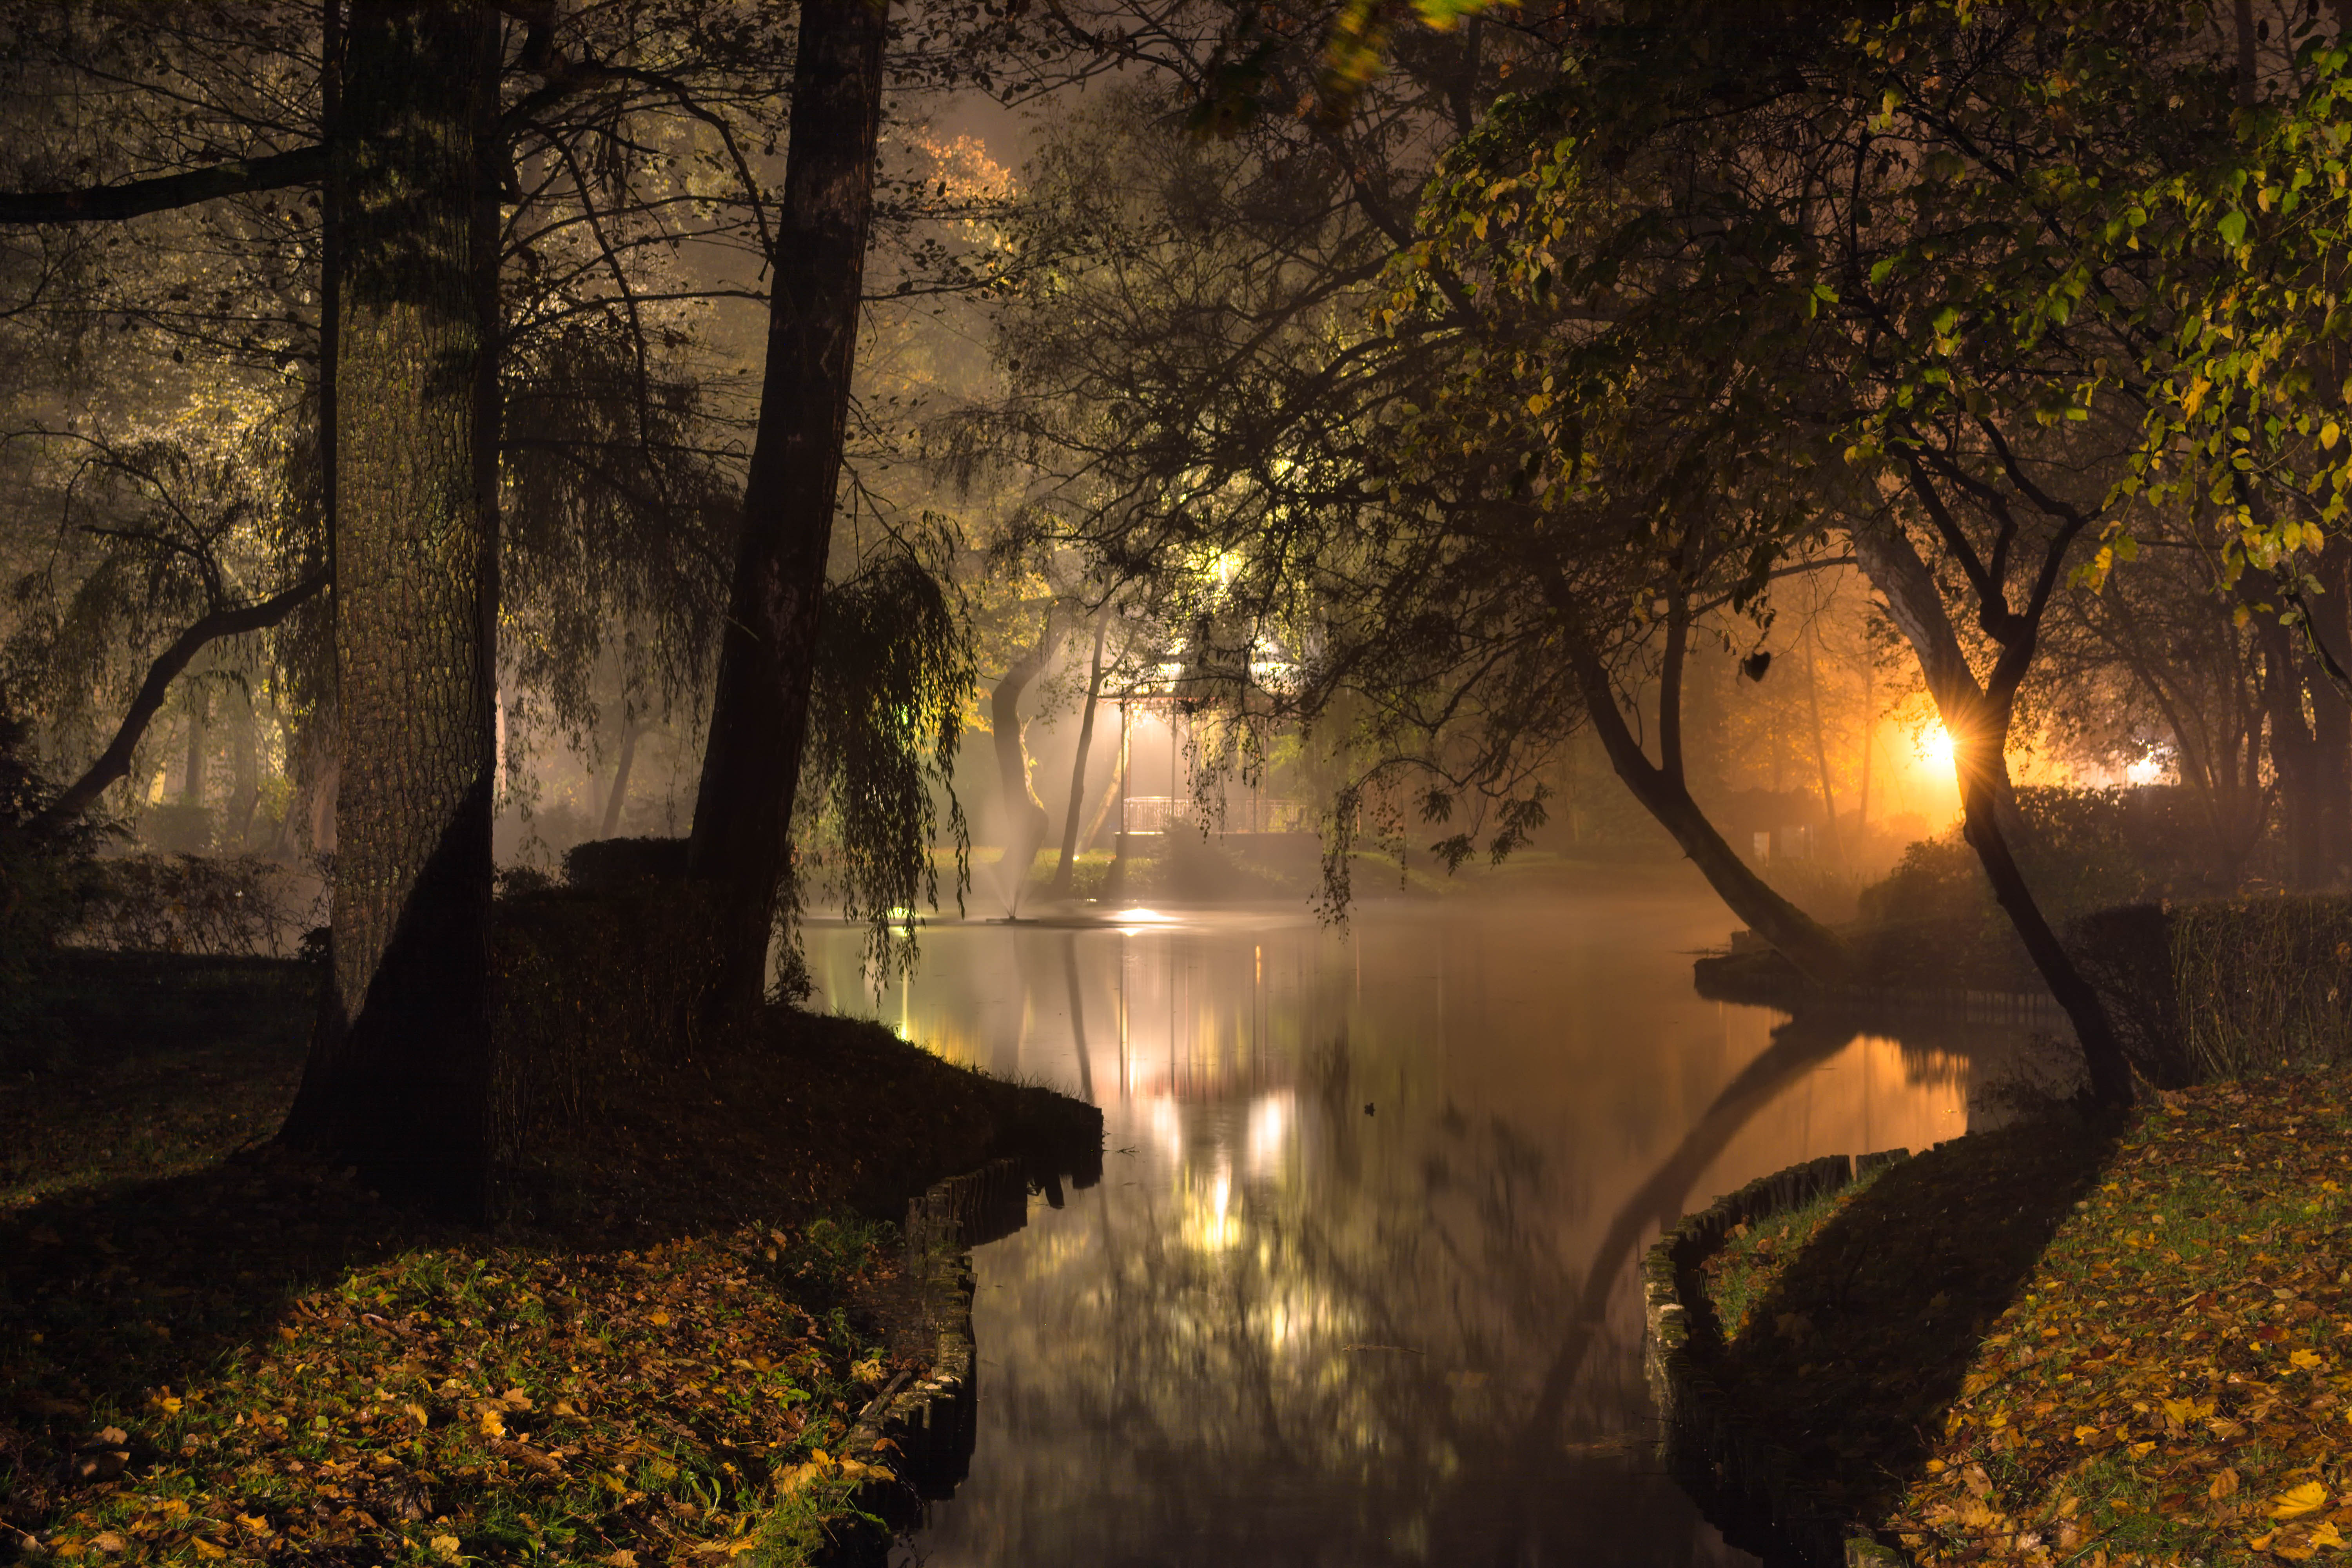 Park,nature,autumn,water,fog,trees,landscape, pond,light,nikon,mist,mirror,, Krzysztof Tollas